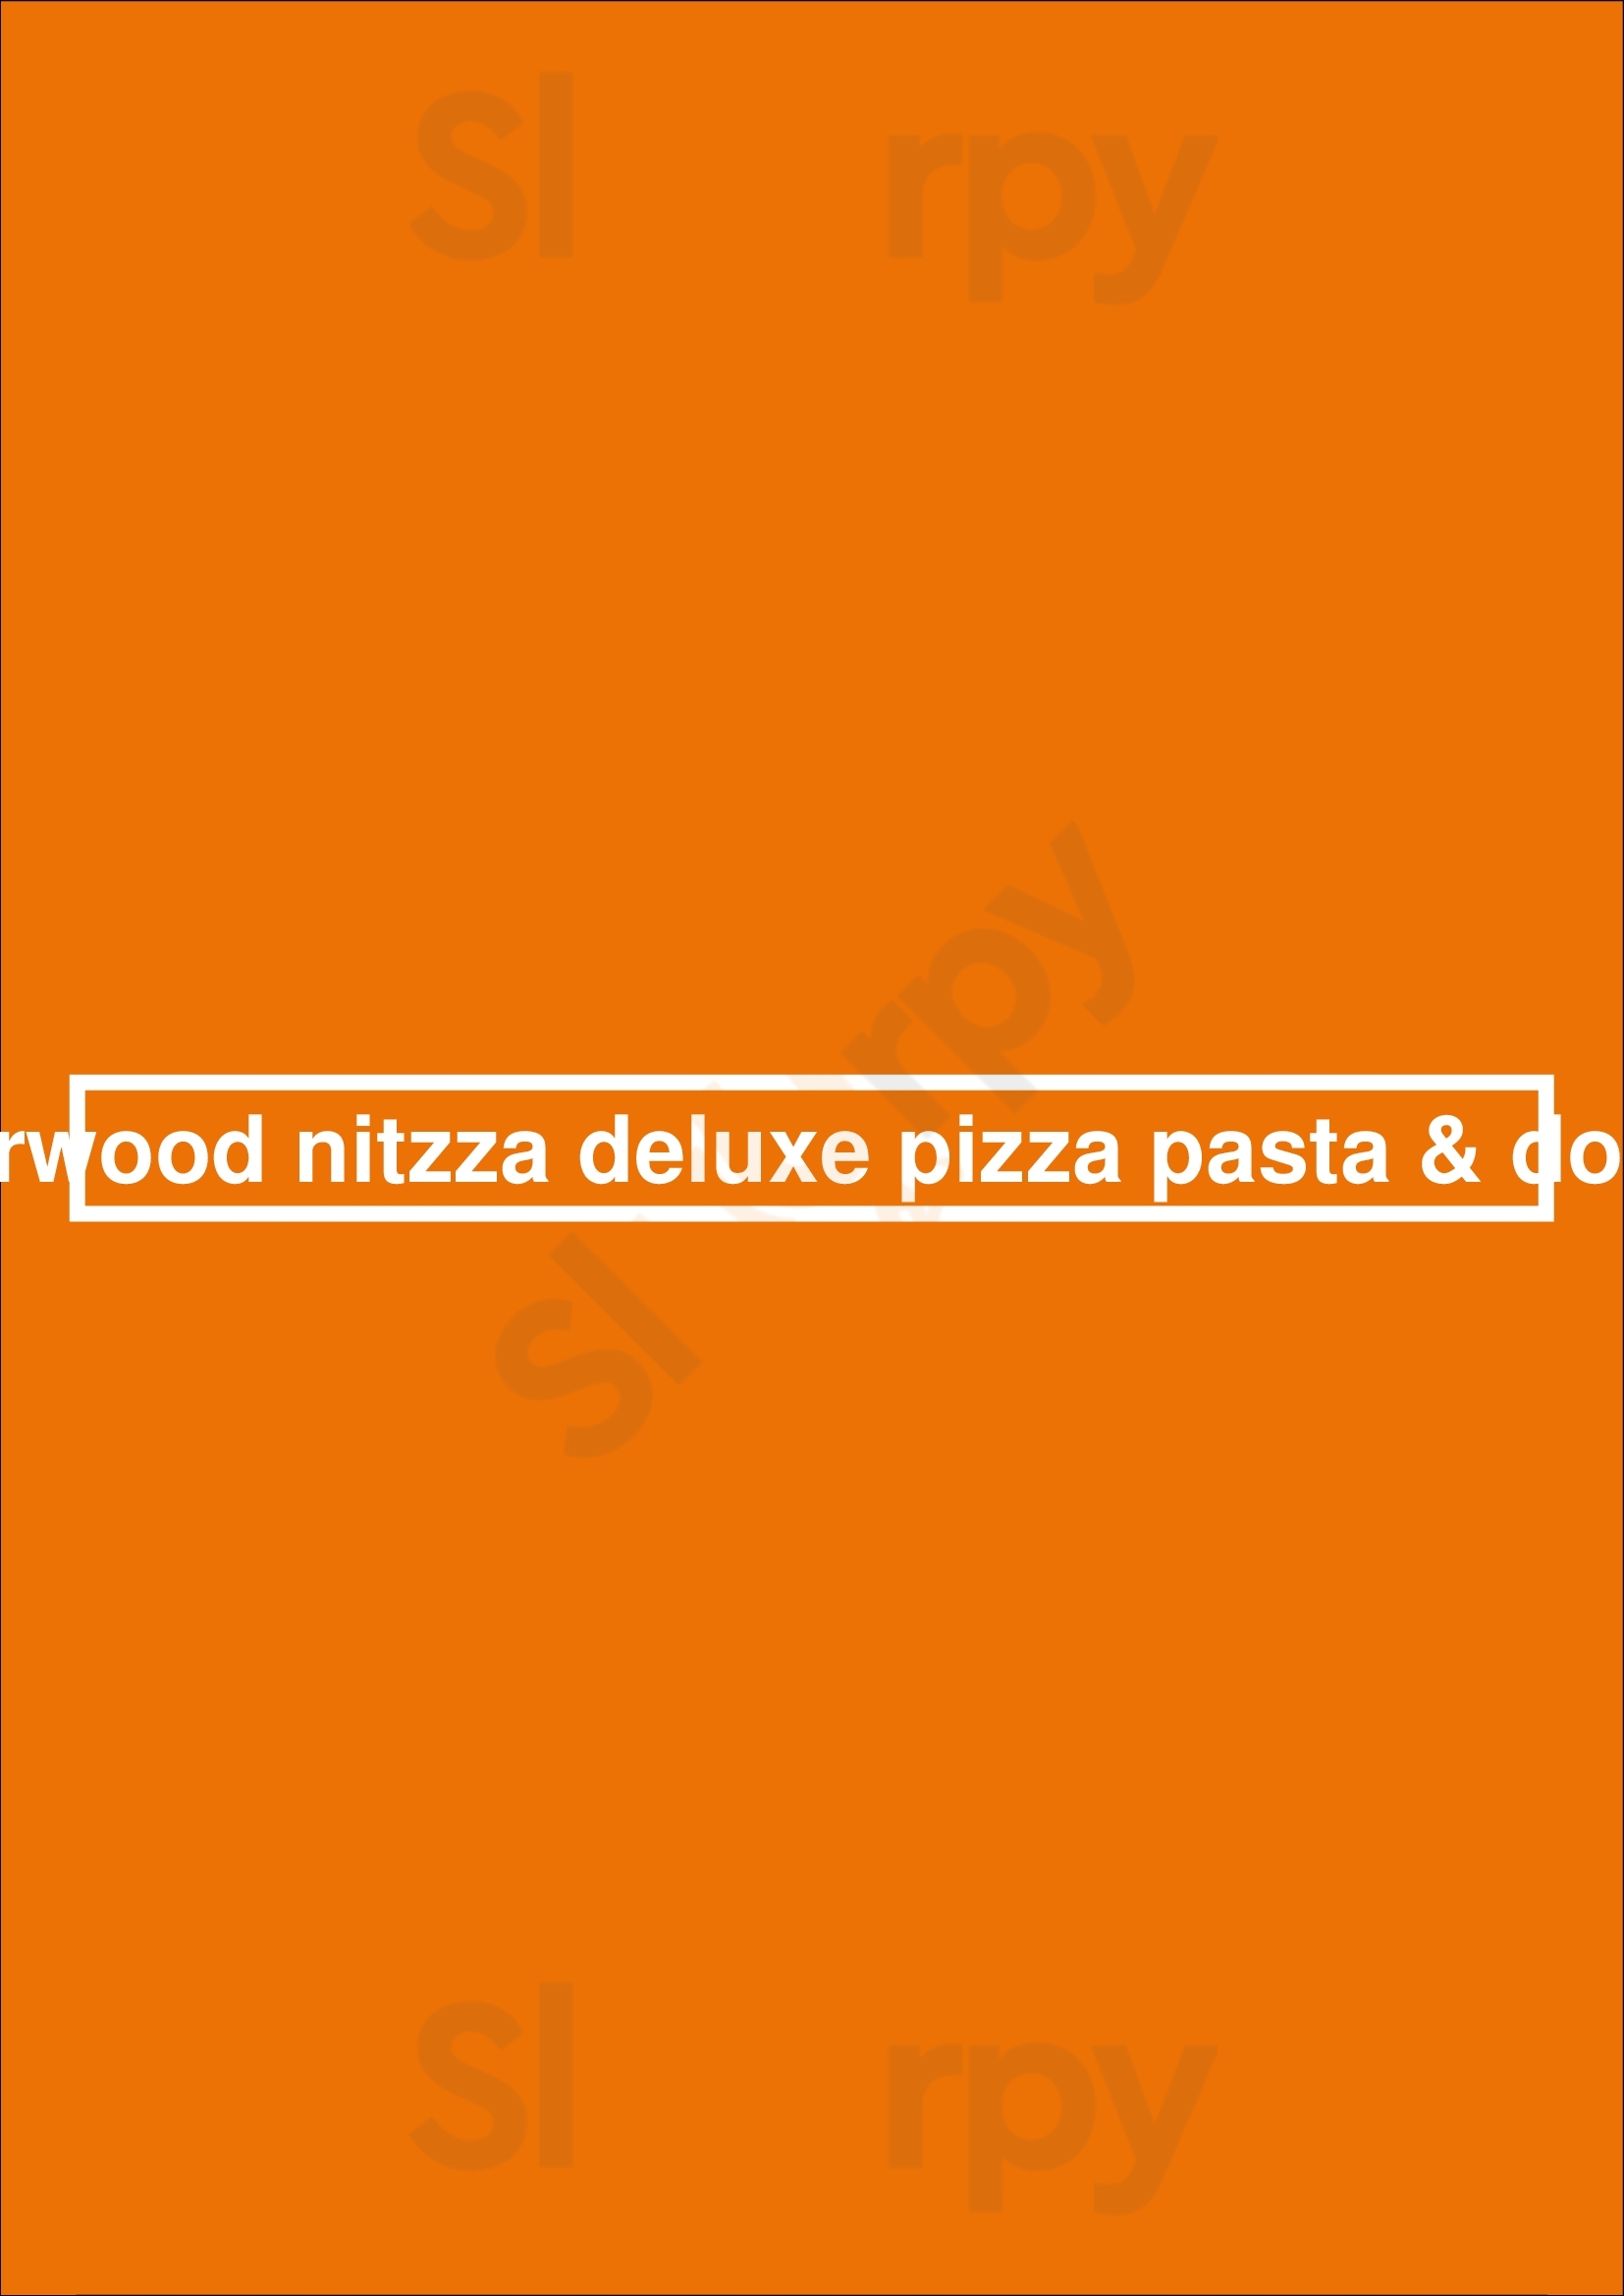 Sherwood Nitzza Deluxe Pizza Sherwood Park Menu - 1